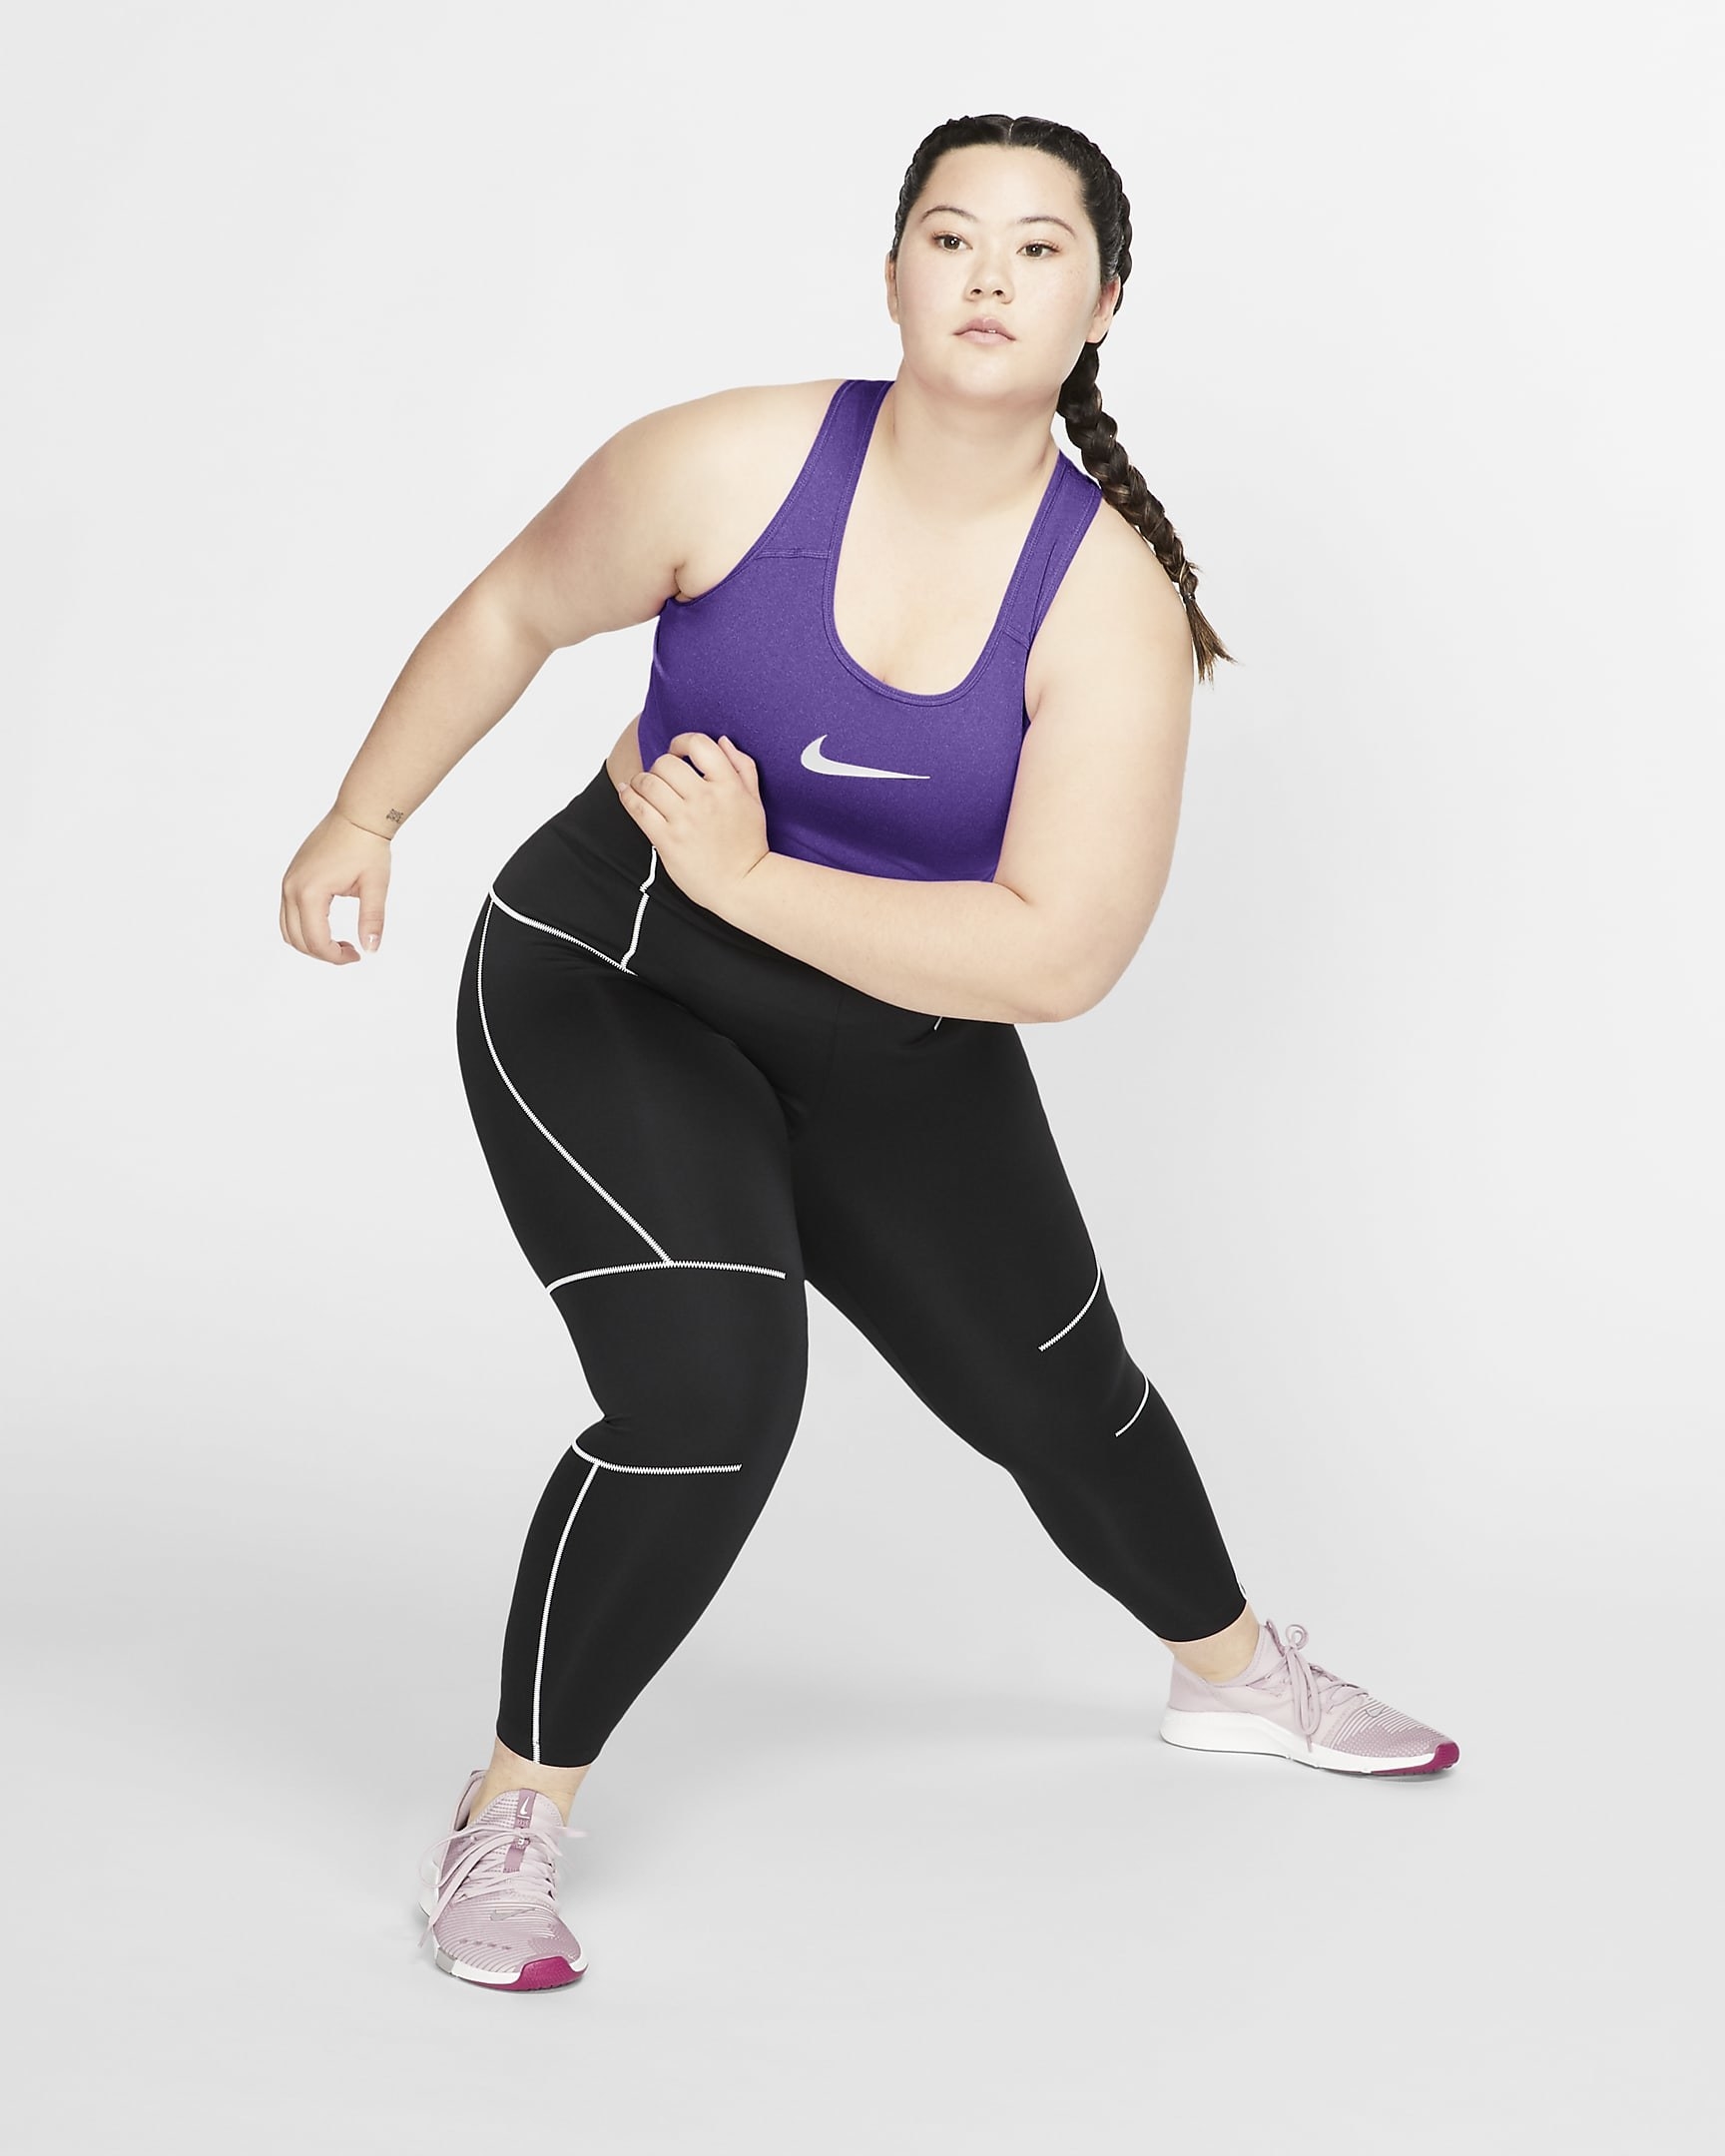 model in dark purple sports bra with Nike logo on the front